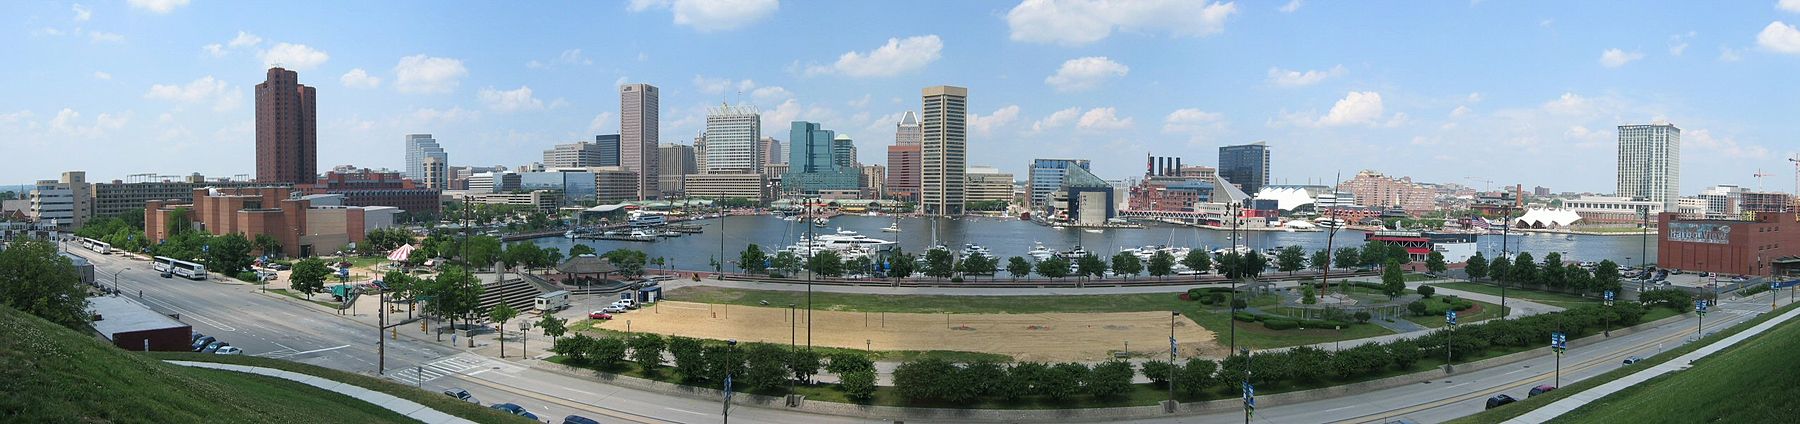 Panoramatická fotografia mesta Baltimore